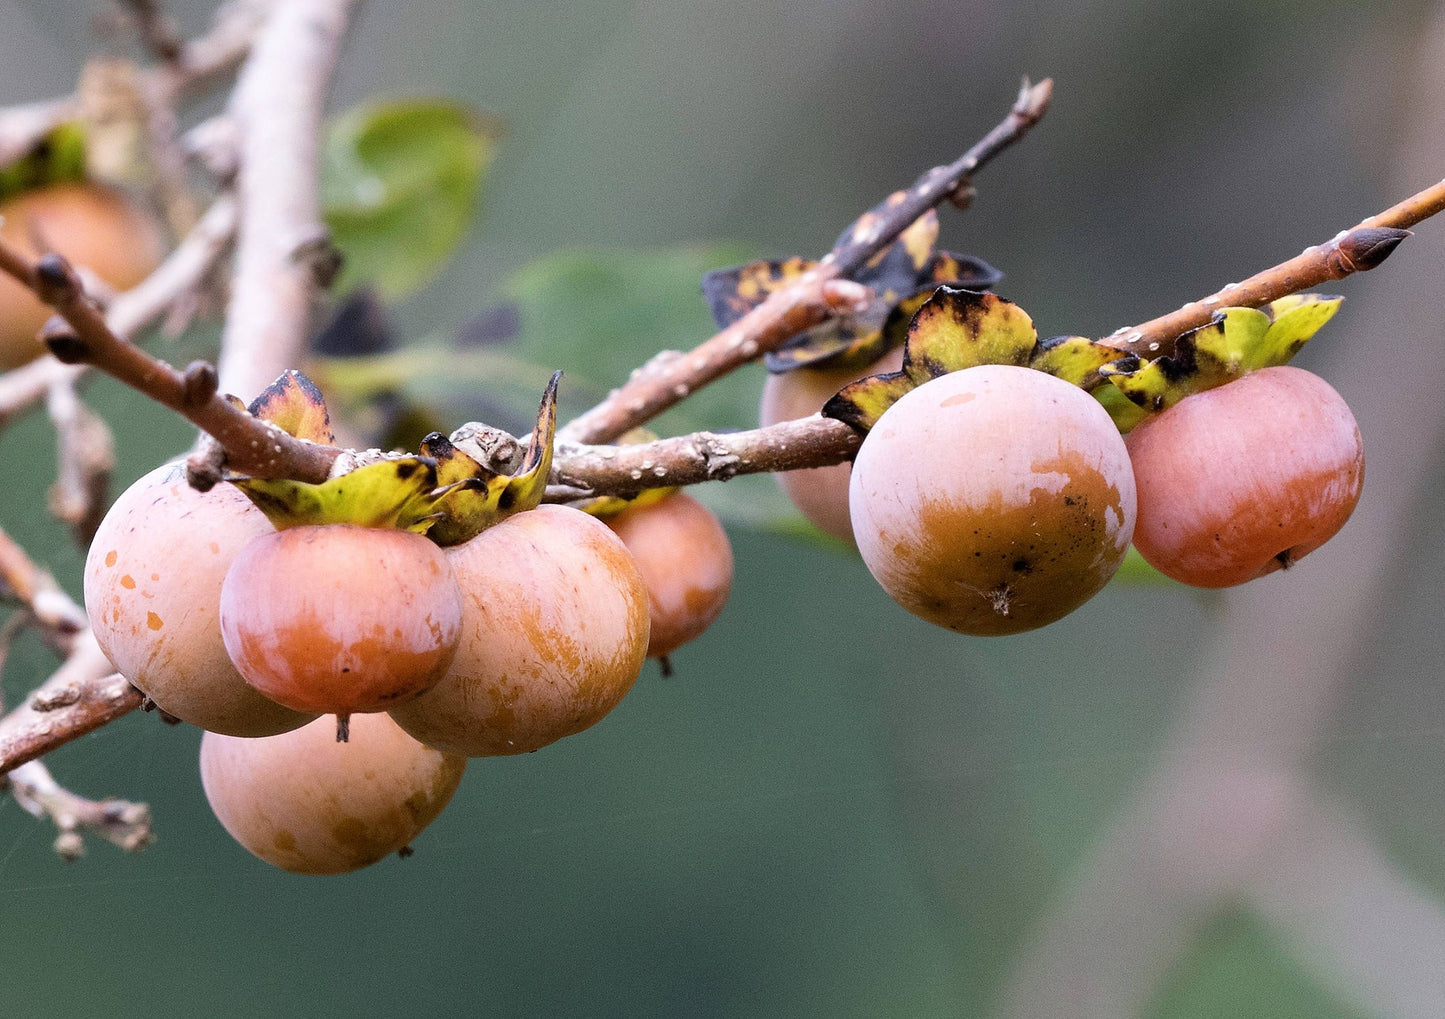 10 ITALIAN PERSIMMON TREE Dateplum Date Plum Fruit Diospyros Lotus Seeds